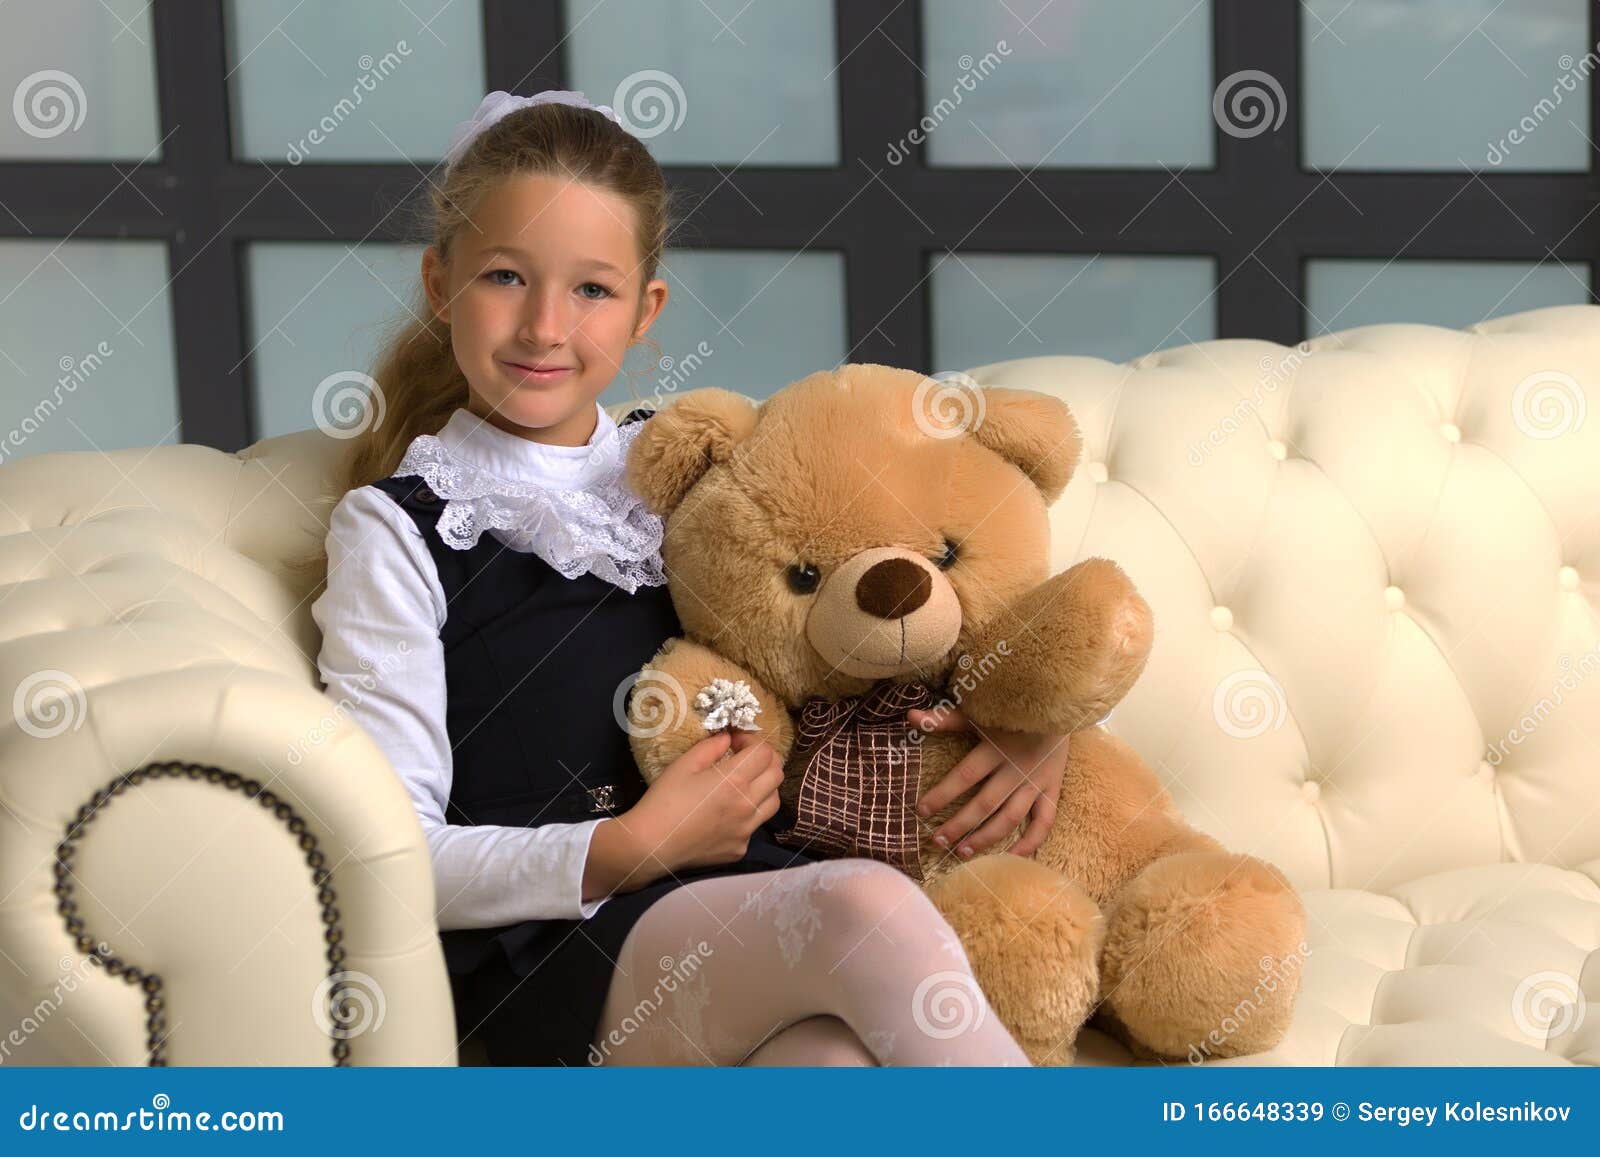 Little Girl on Sofa Hugging Teddy Bear. Stock Image - Image of ...